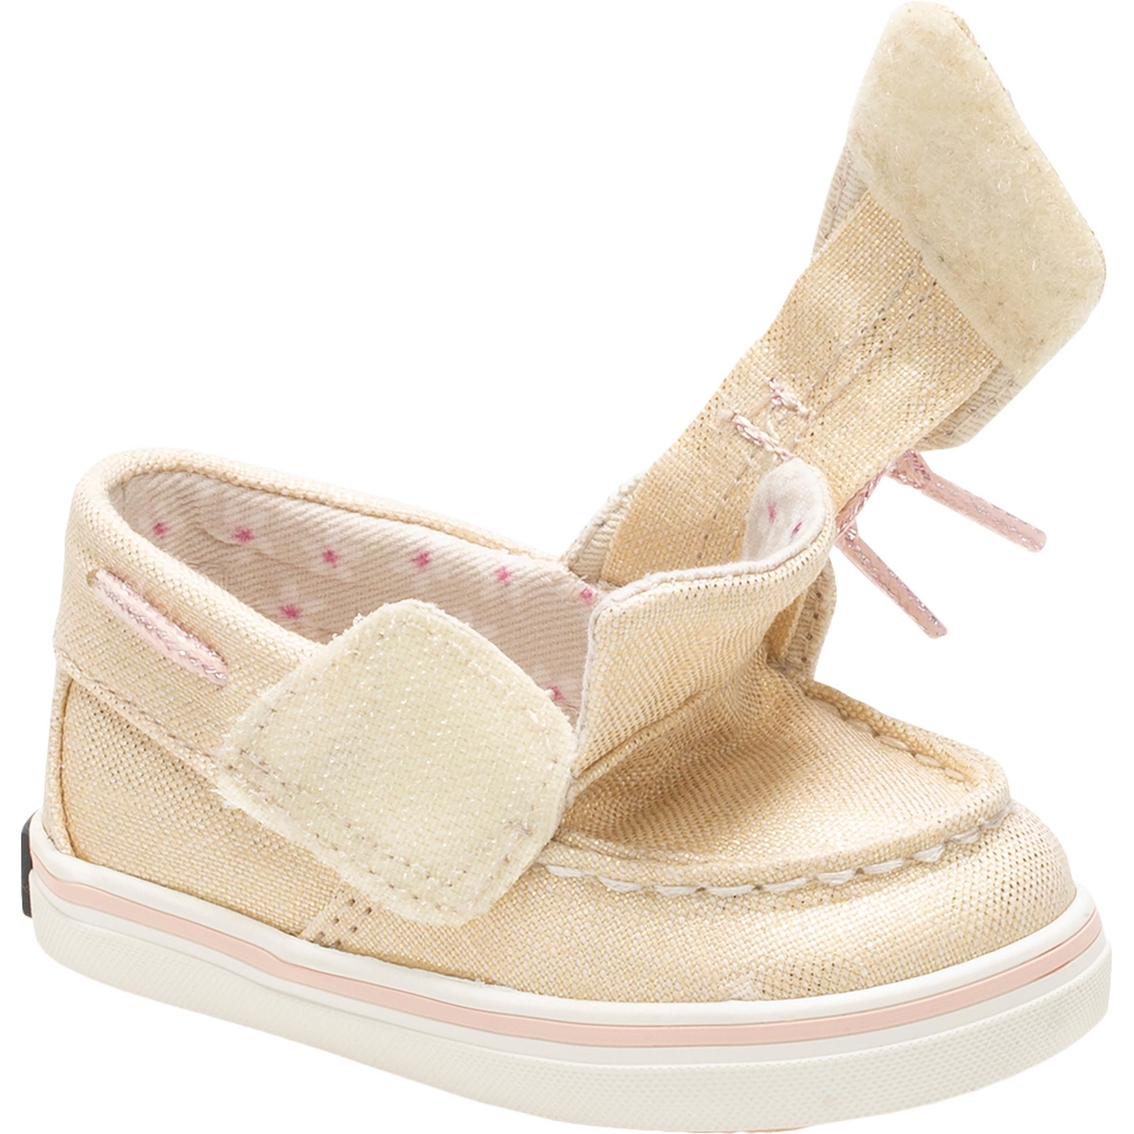 Sperry Infant Girls Intrepid Jr. Crib Shoes - Image 2 of 6